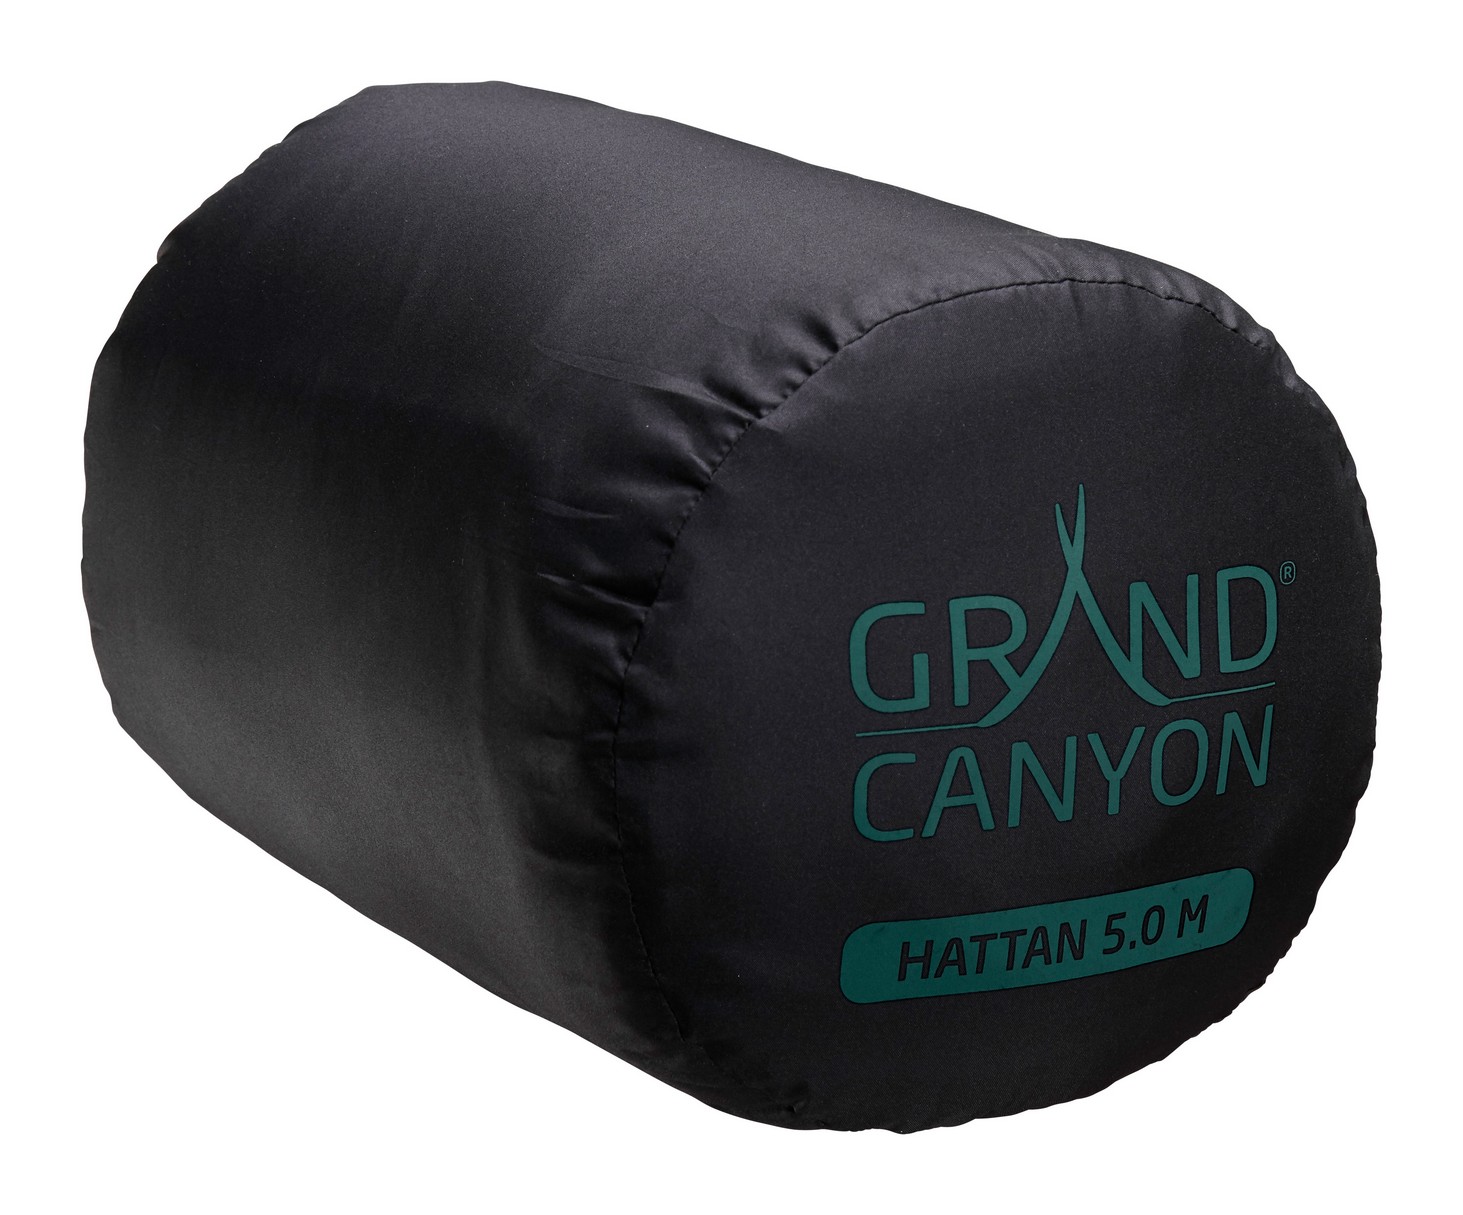 Grand Canyon "Hattan 5.0 M" - botanical garden